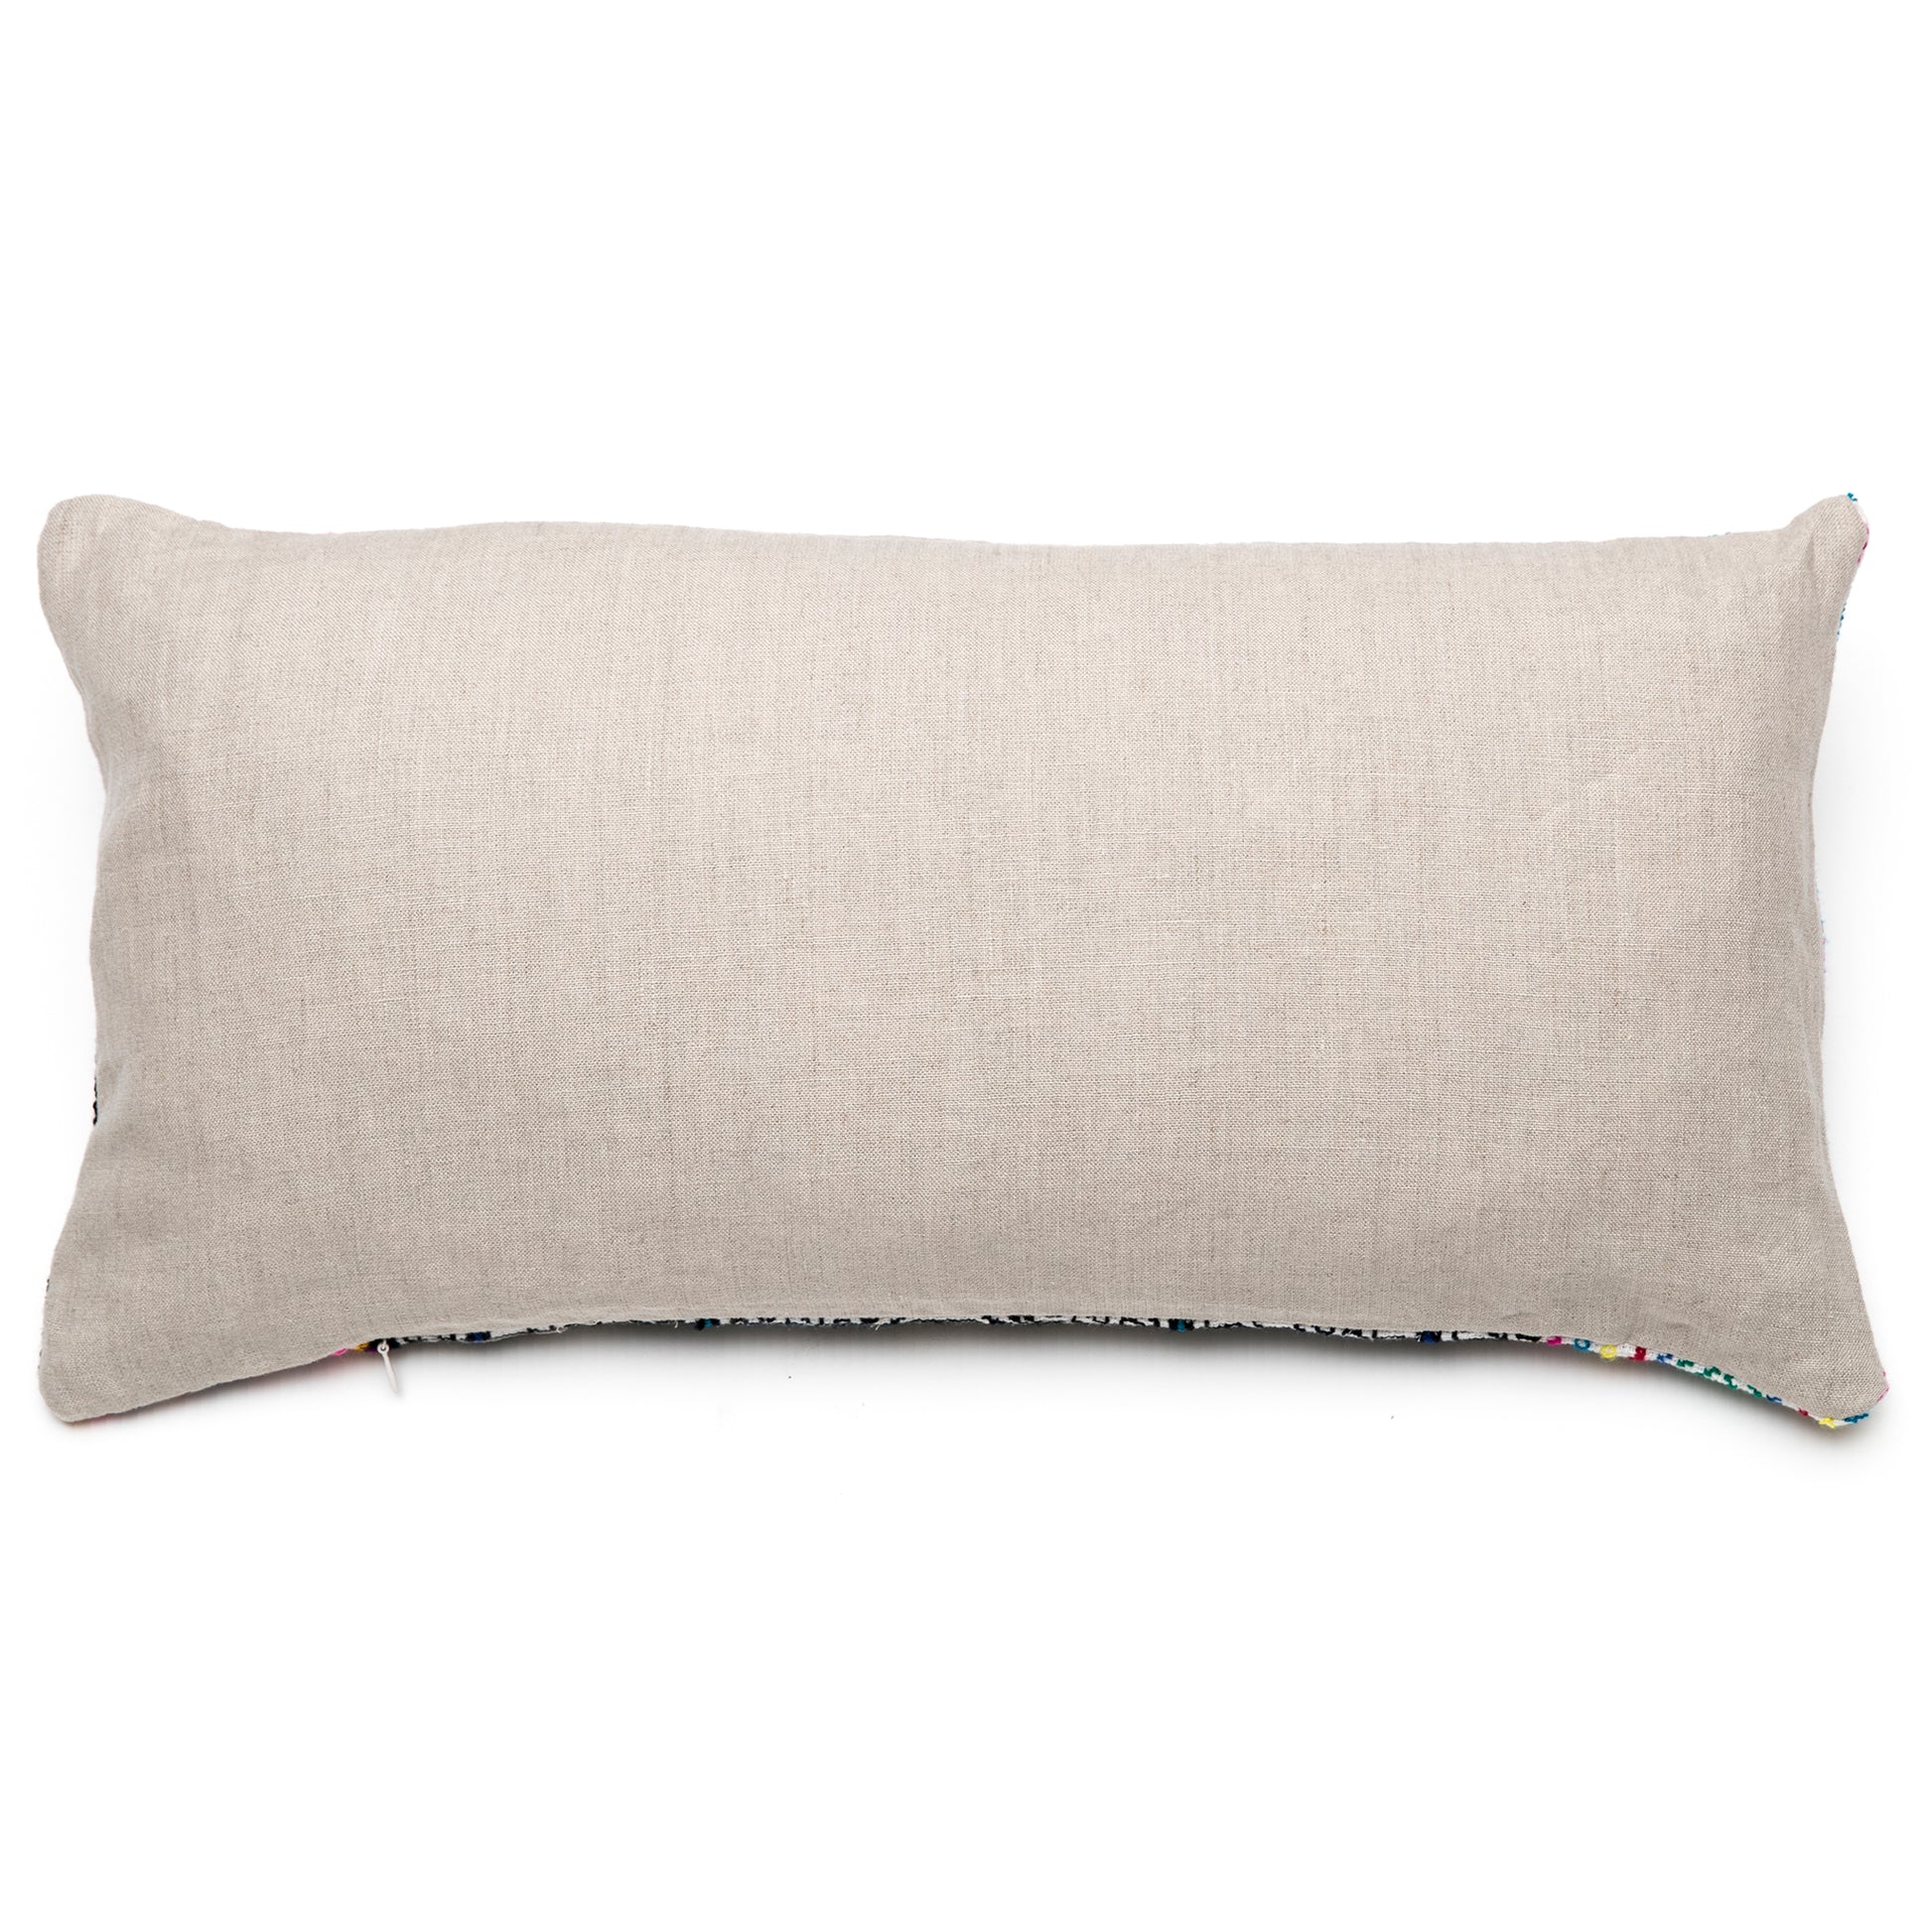 Intiearth Shipibo hand embroidered lumbar pillow linen back